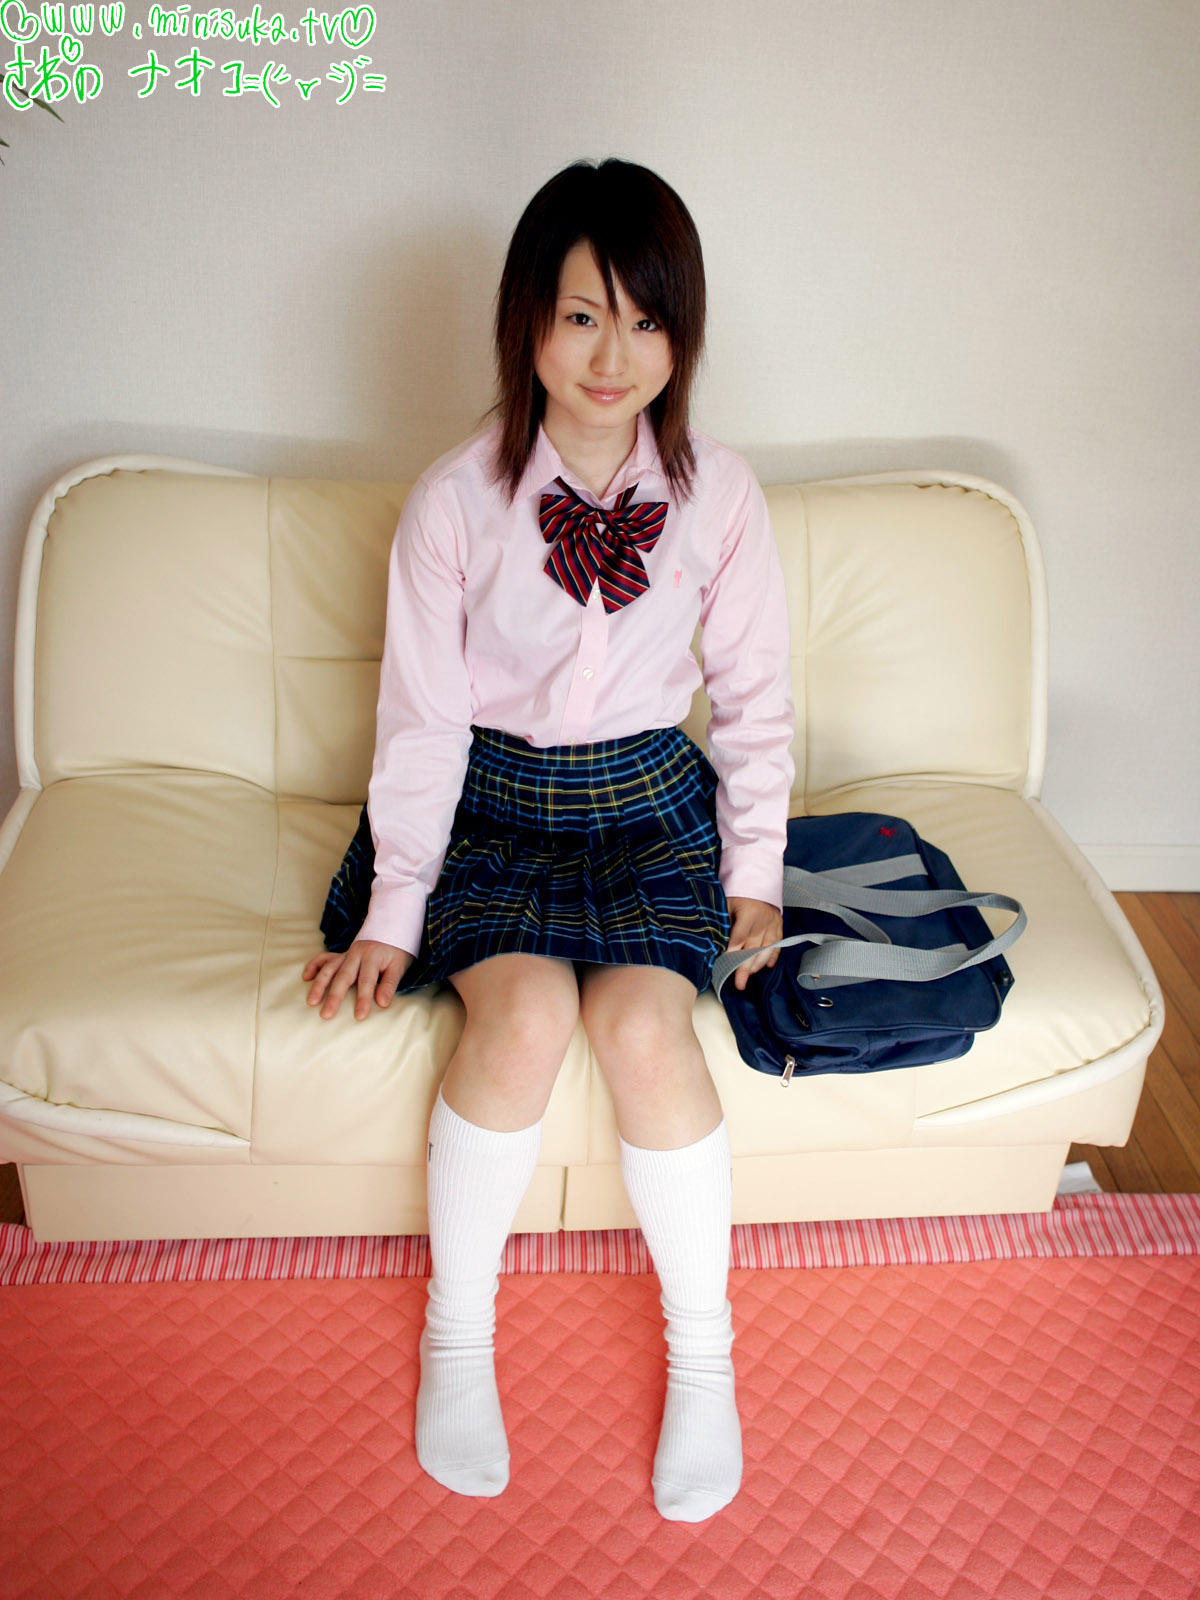 Naoko Okano (1)[ Minisuka.tv ]Naoko Sawano, female high school student in active service